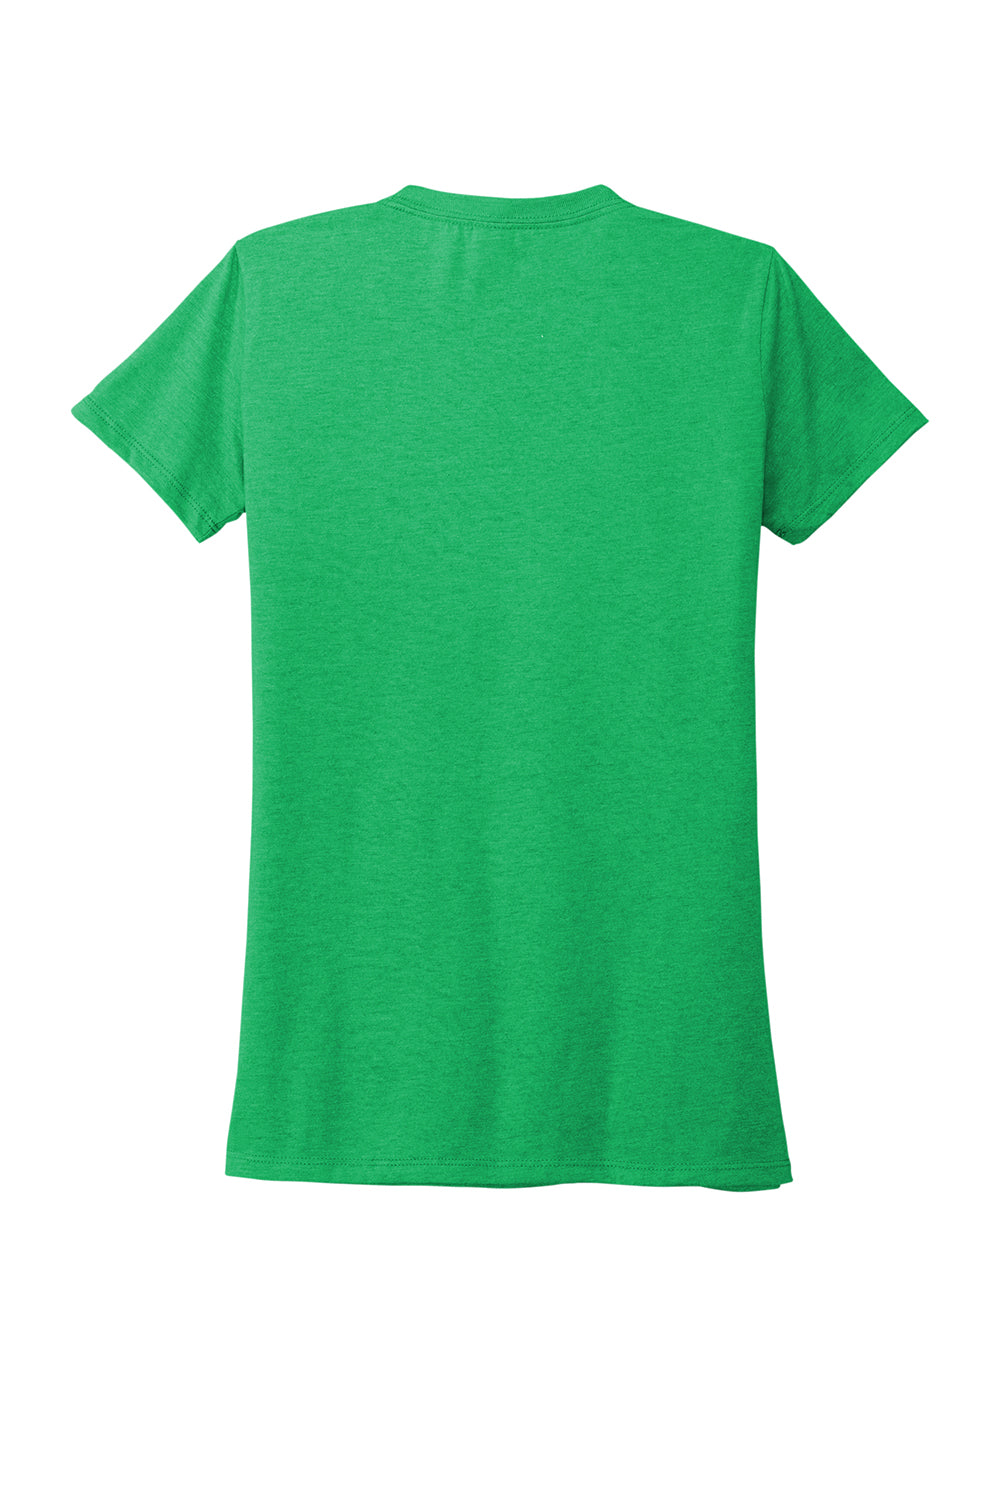 Allmade AL2008 Womens Short Sleeve Crewneck T-Shirt Enviro Green Flat Back